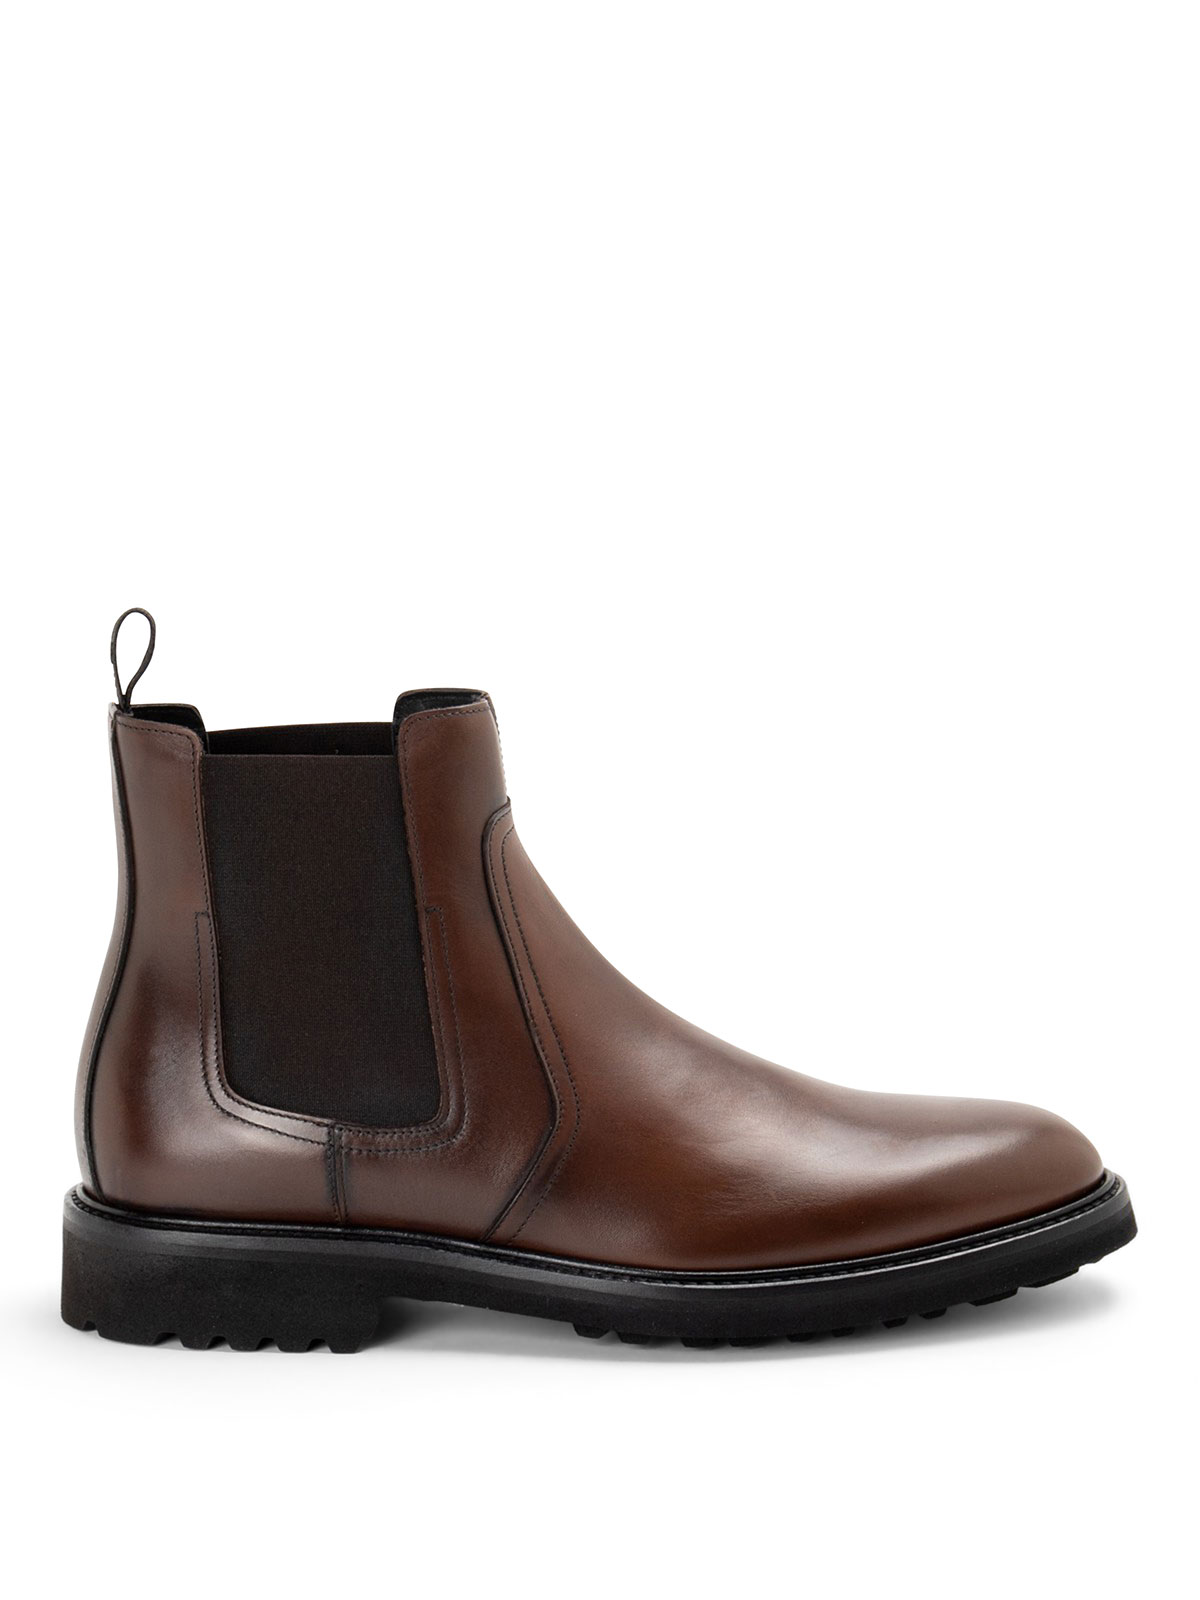 Baldinini Brown Leather Boots